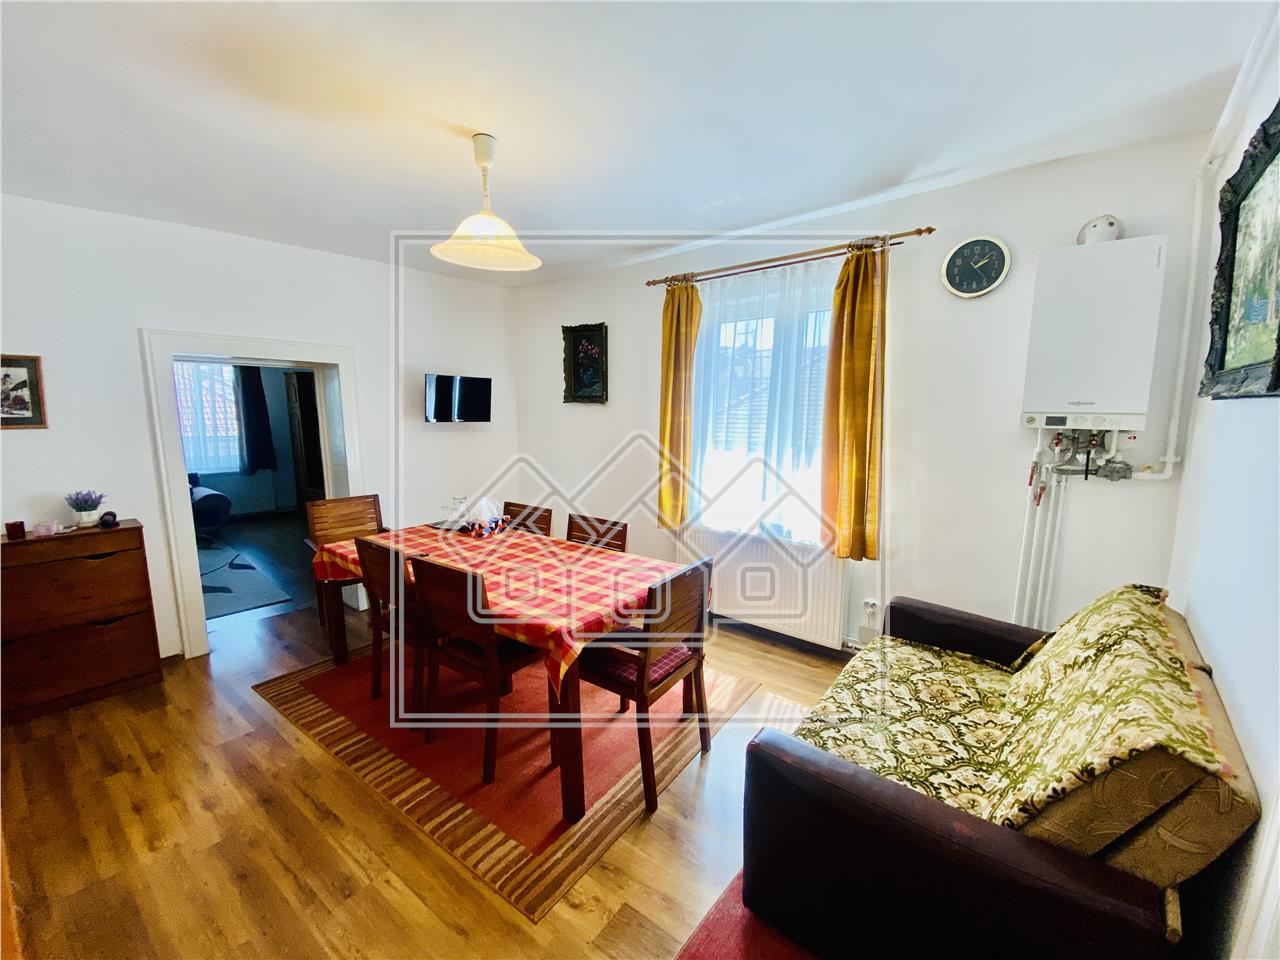 Apartament de vanzare in Sibiu-la casa - 142 mp utili - Zona  Hipodrom